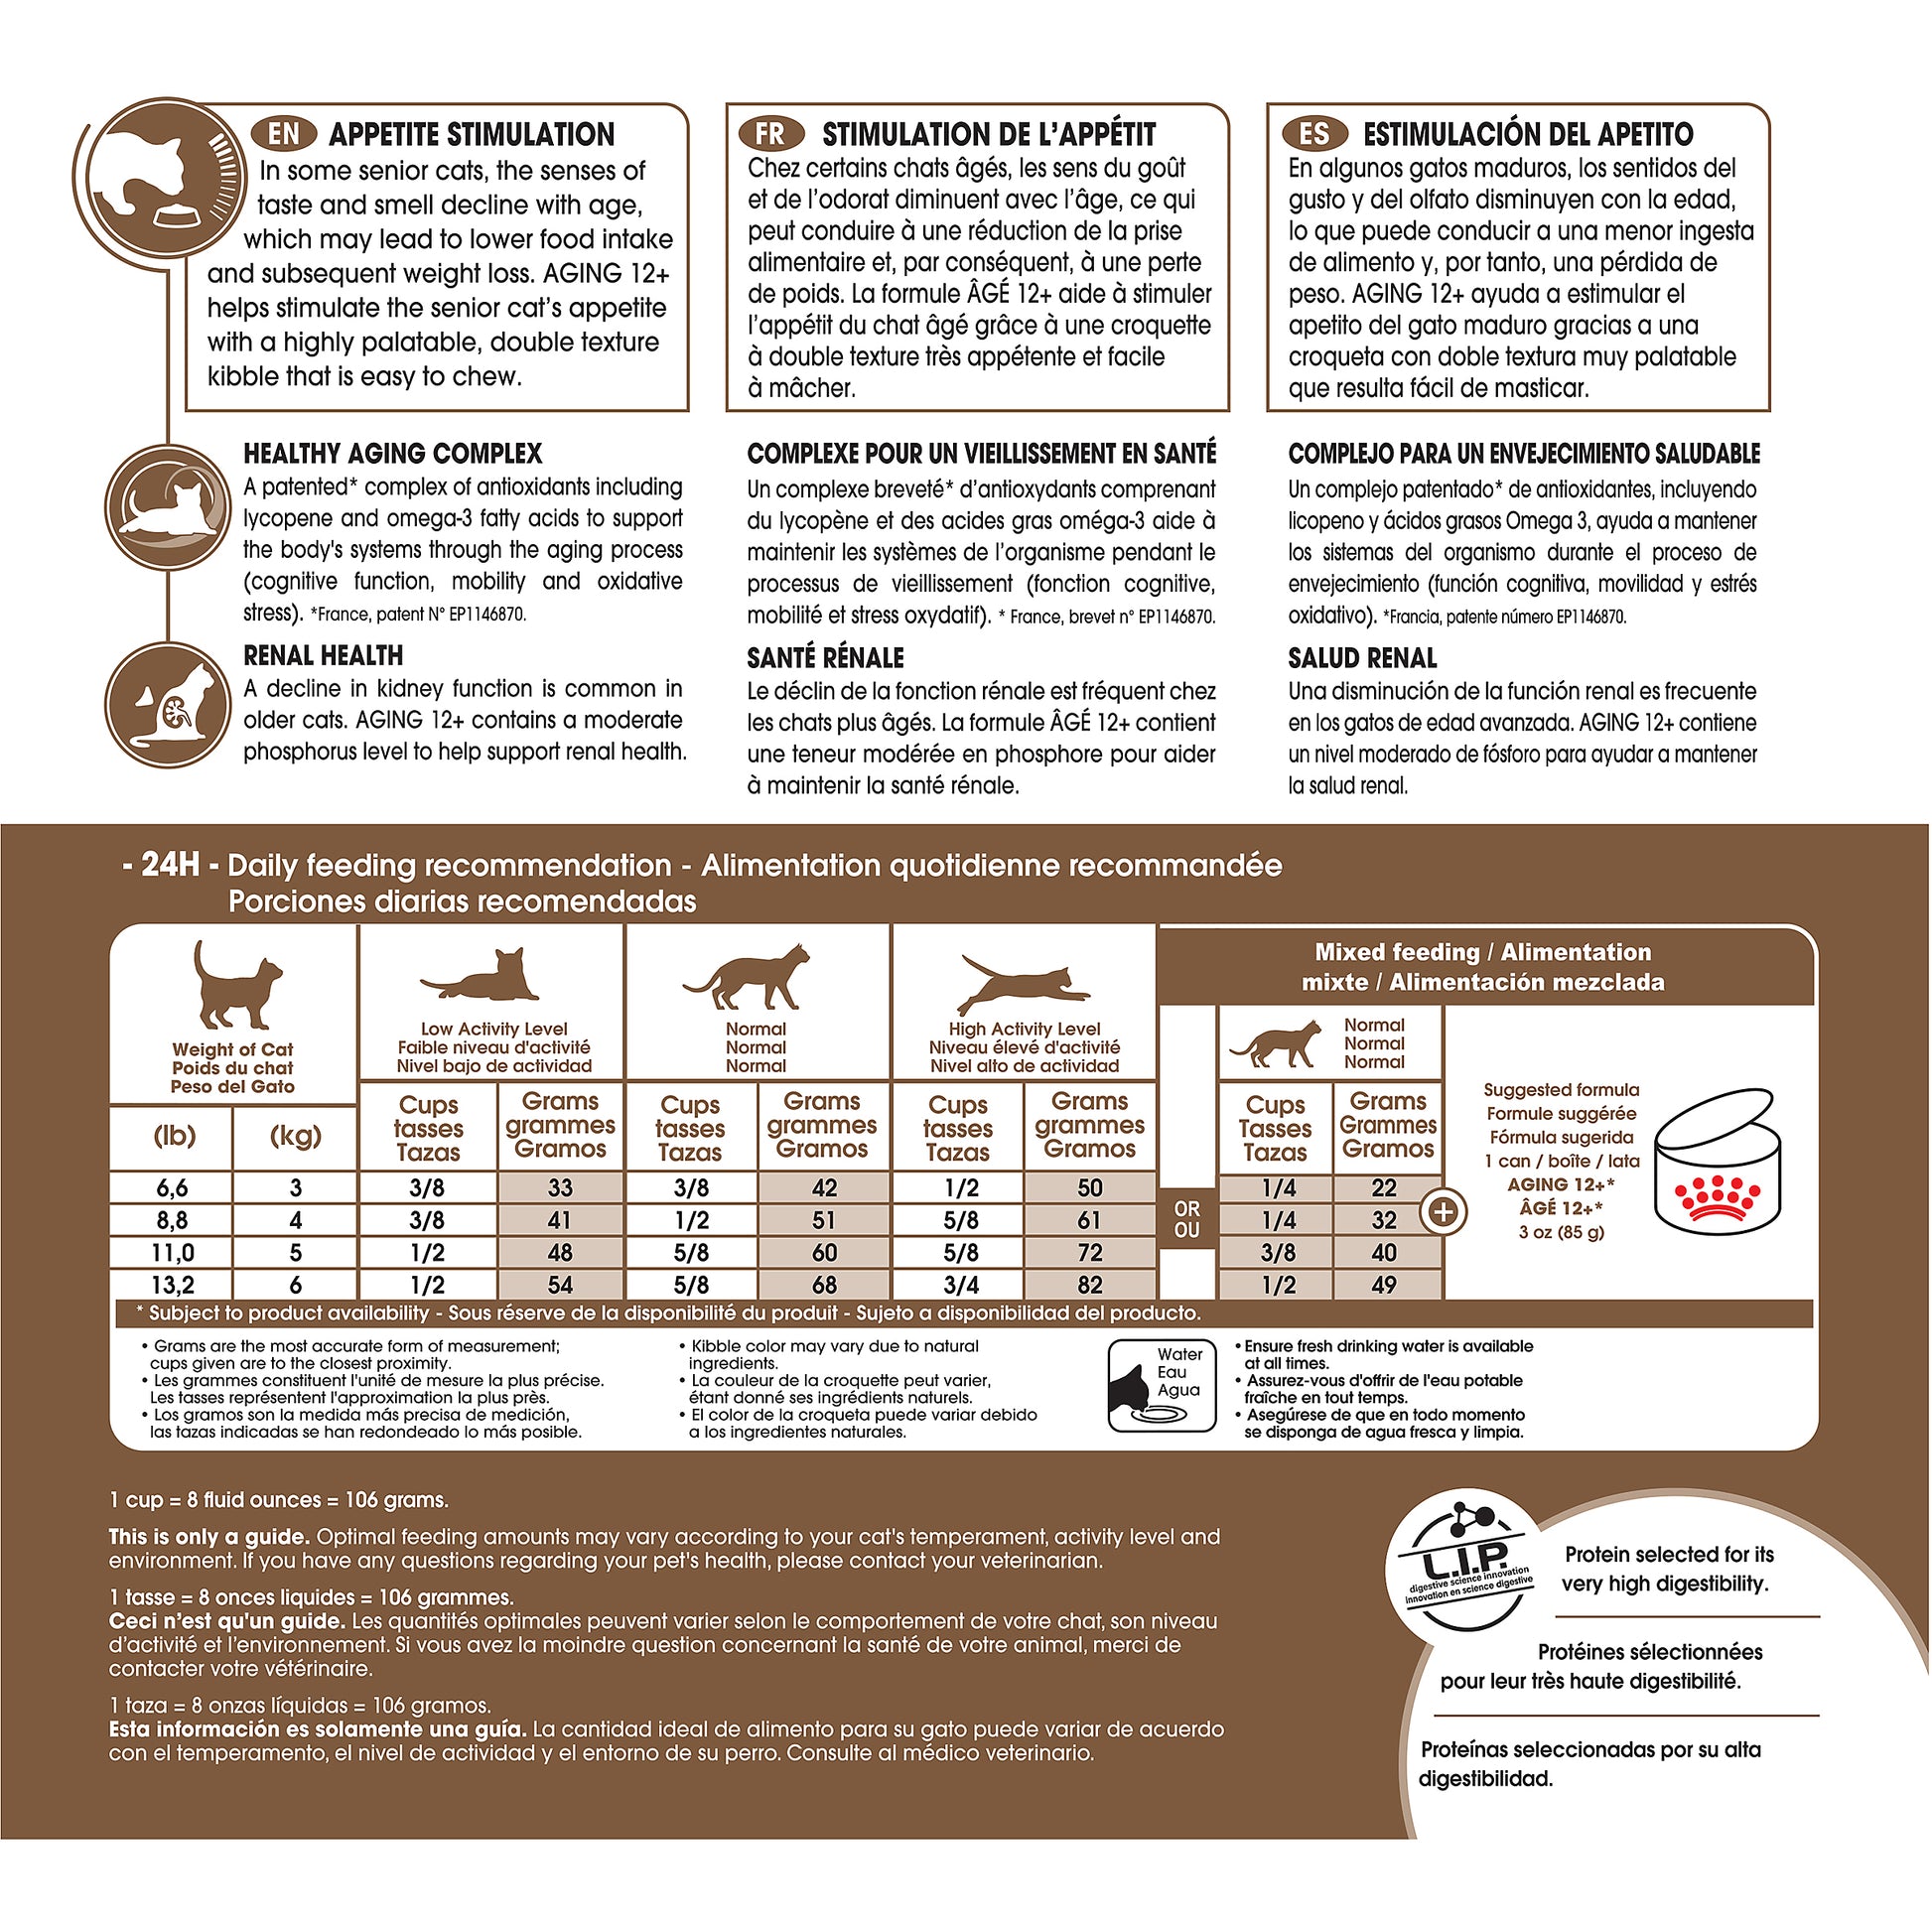 Royal Canin Aging 12+ Dry Adult Cat Food  Cat Food  | PetMax Canada